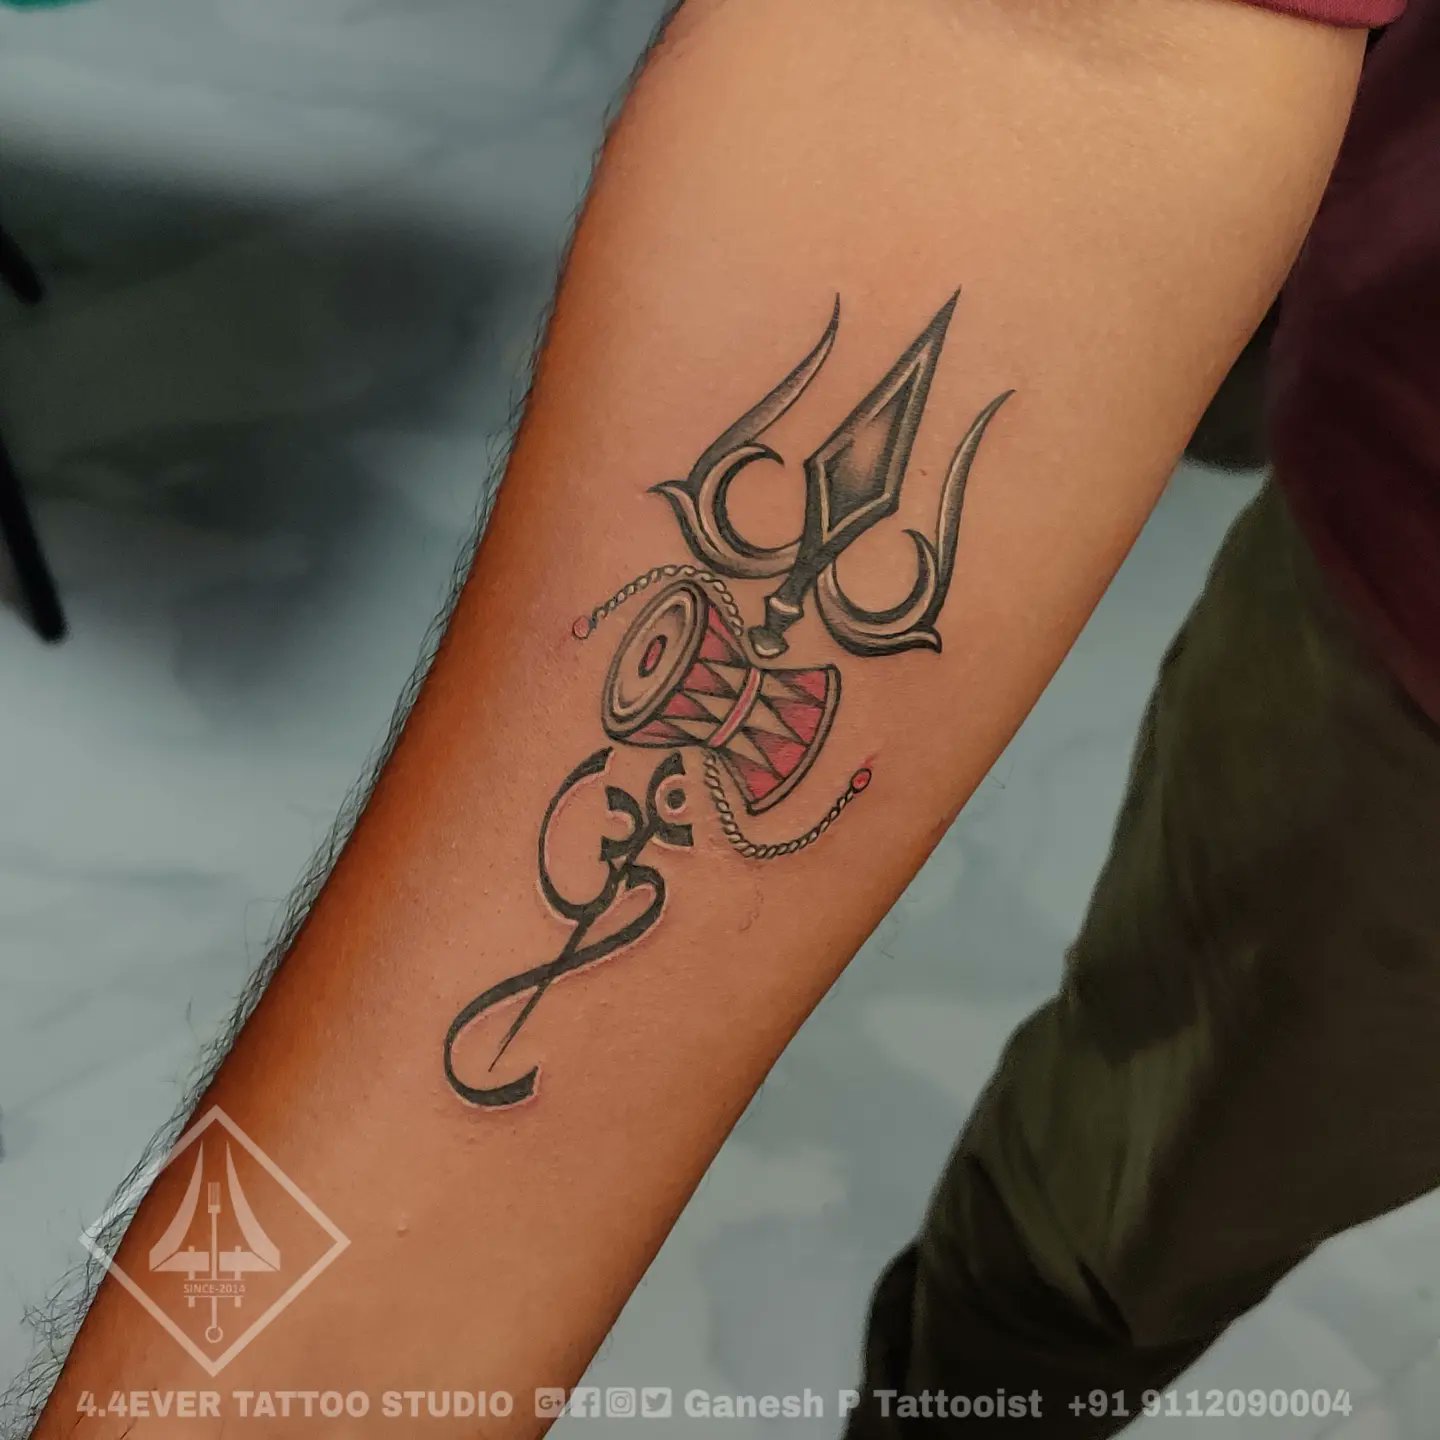 Tattoo uploaded by Ratan chaudhary  Trishul damru with mrutyunjay mantra  handband tattoo  Tattoodo